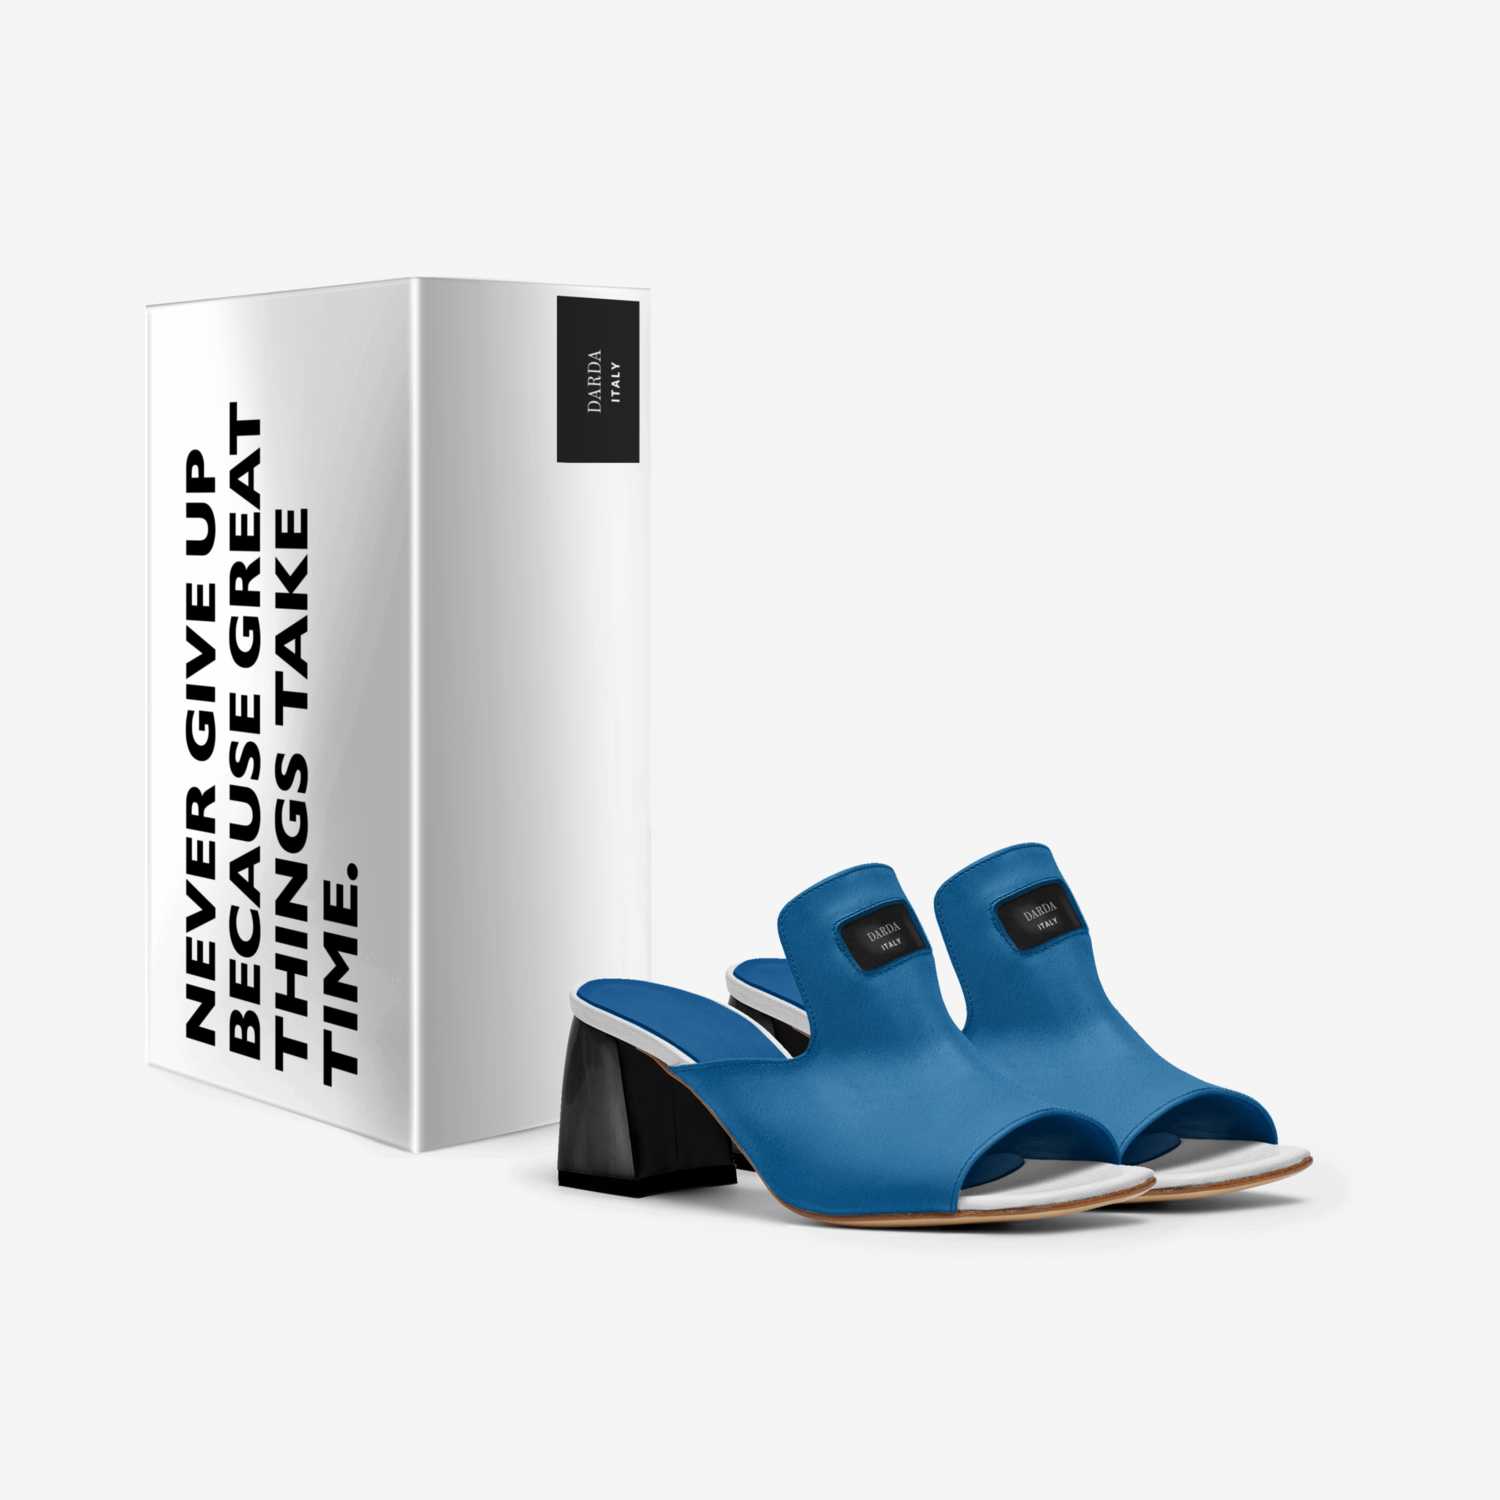 DARDA custom made in Italy shoes by Abram Heath | Box view